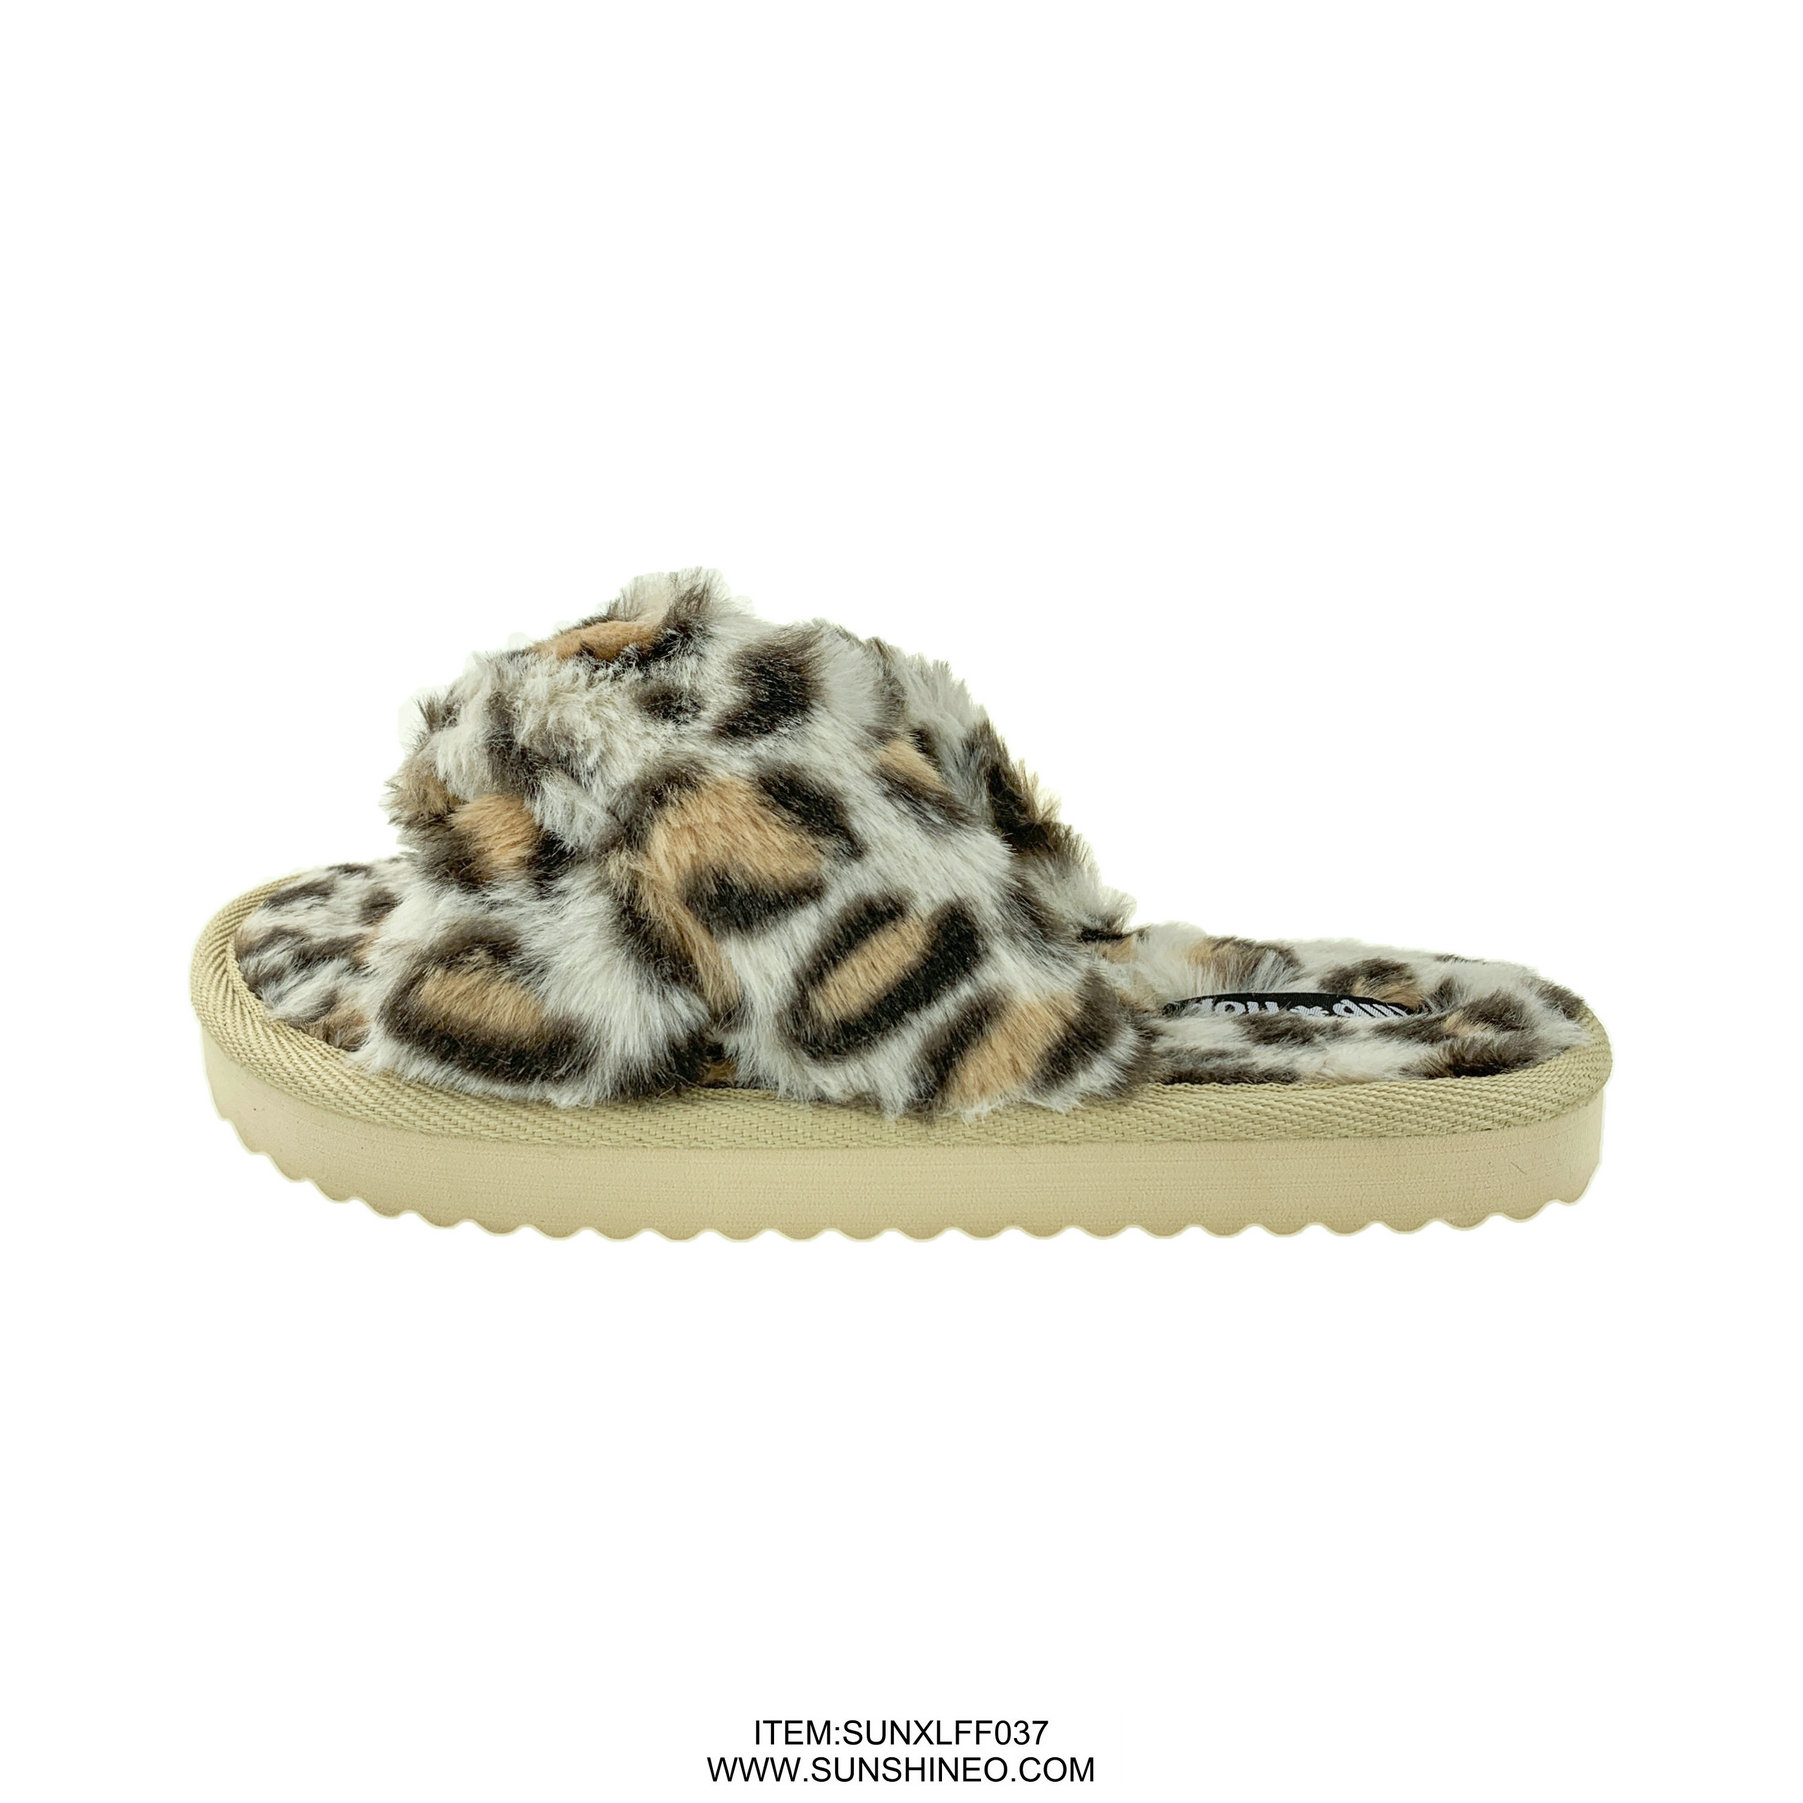 SUNXLFF037 fur flip flop sandals winter slippers